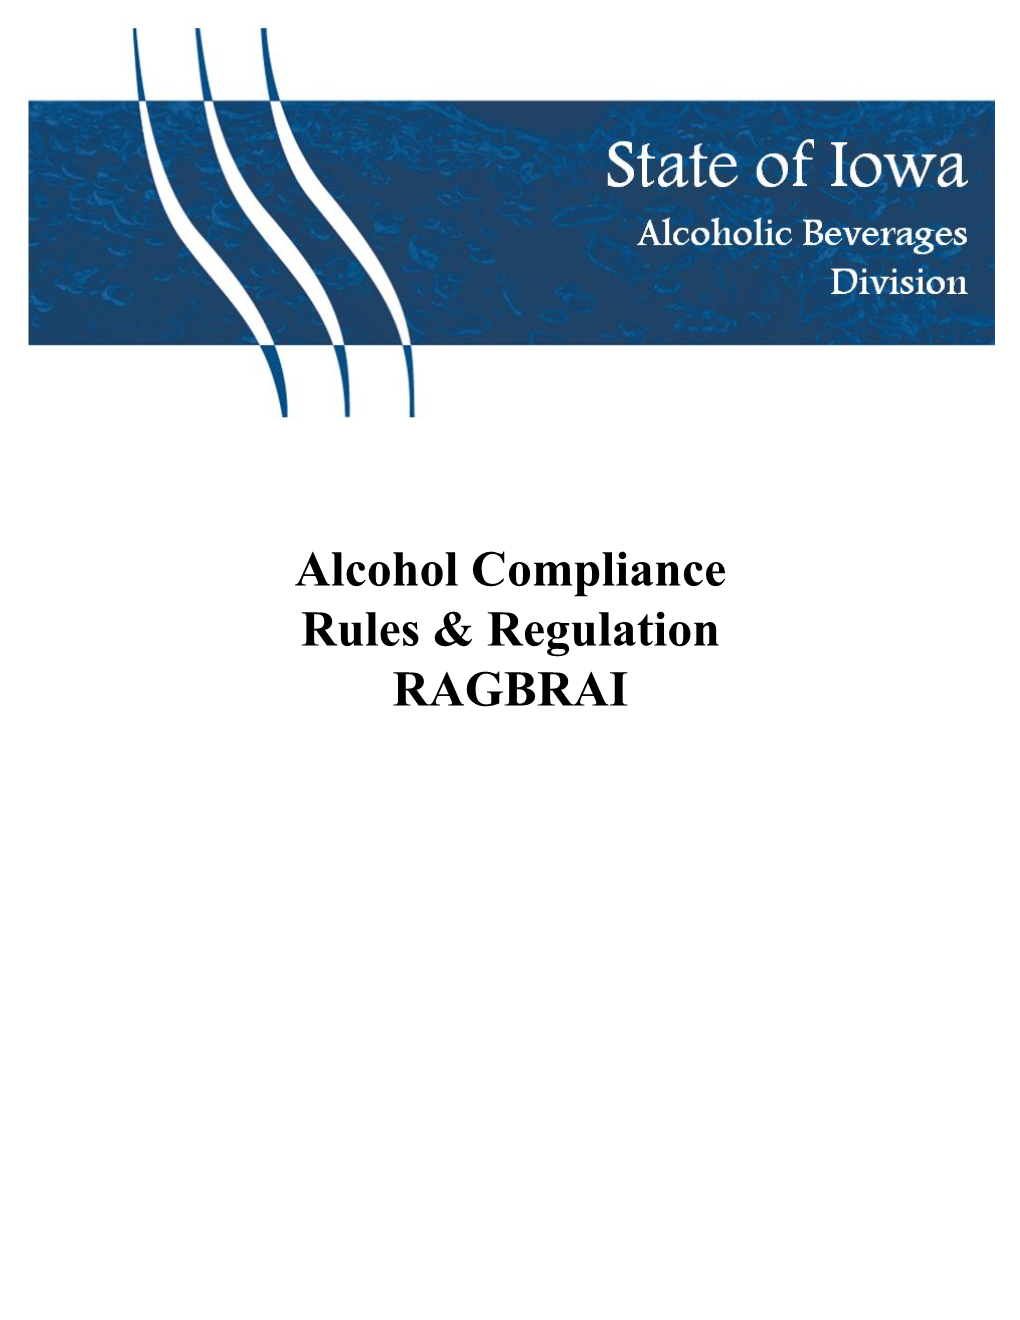 Alcohol Compliance Rules & Regulation RAGBRAI